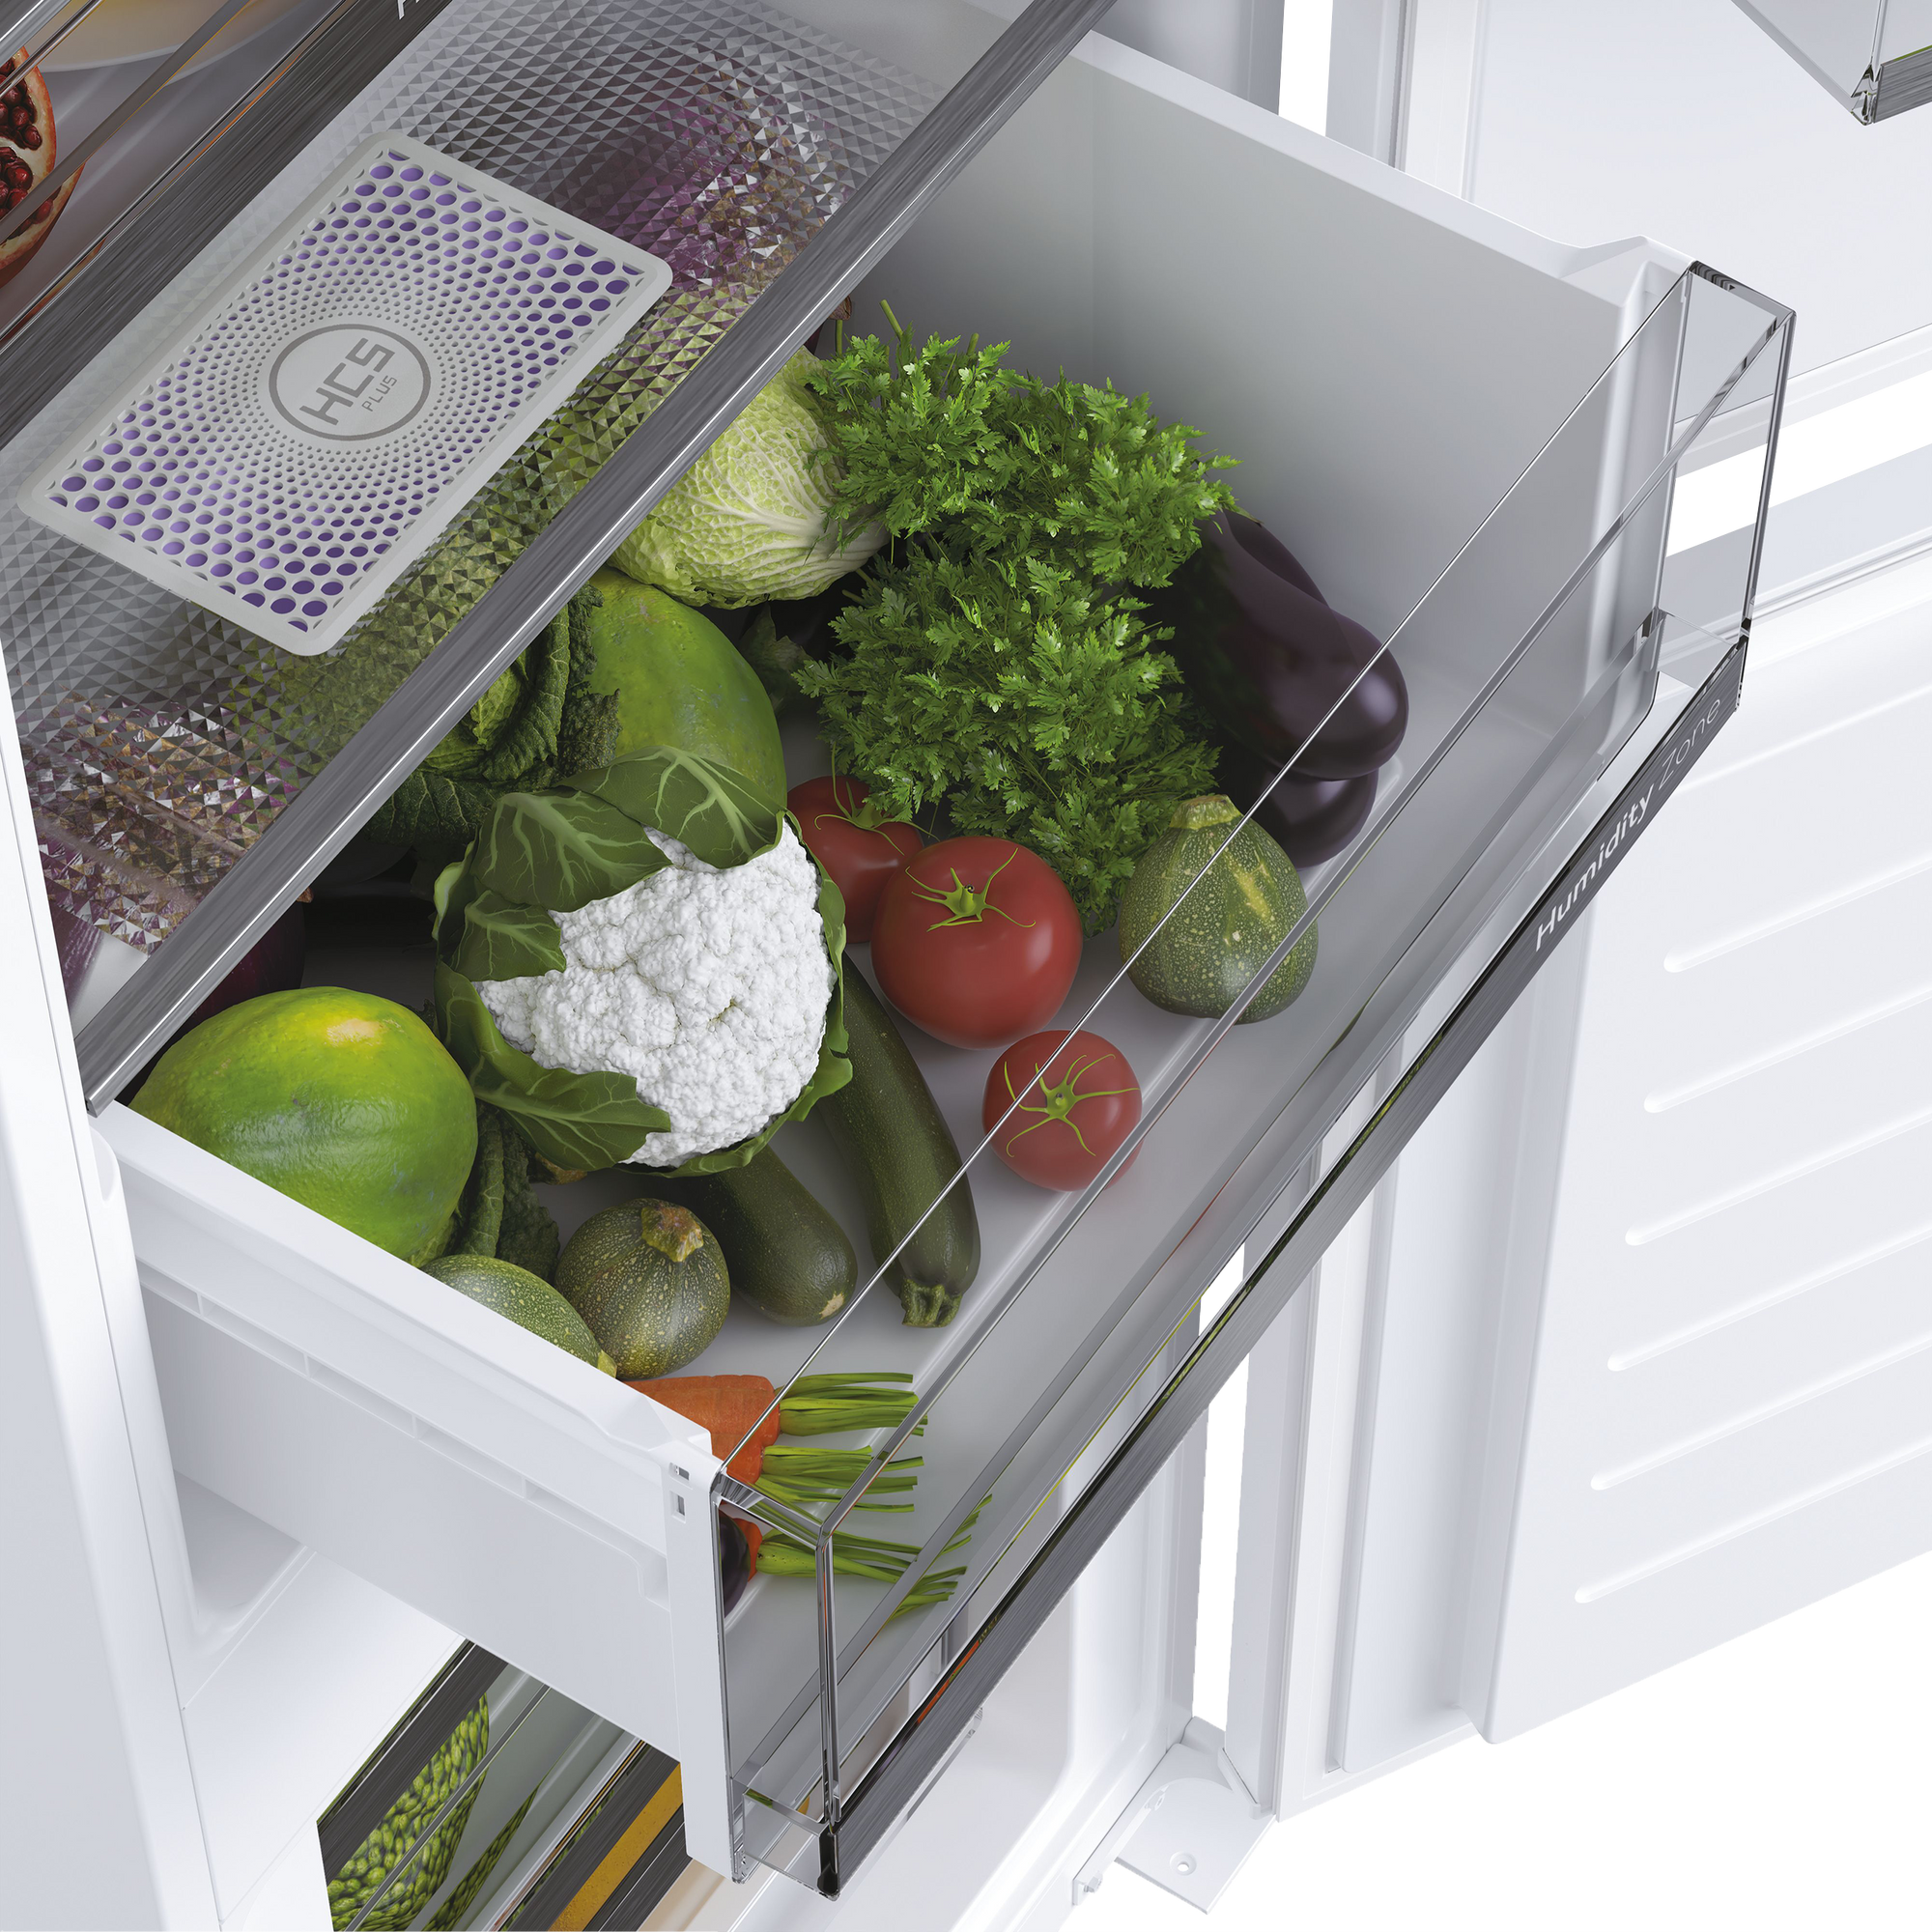 Холодильник Haier HBW5518ERU